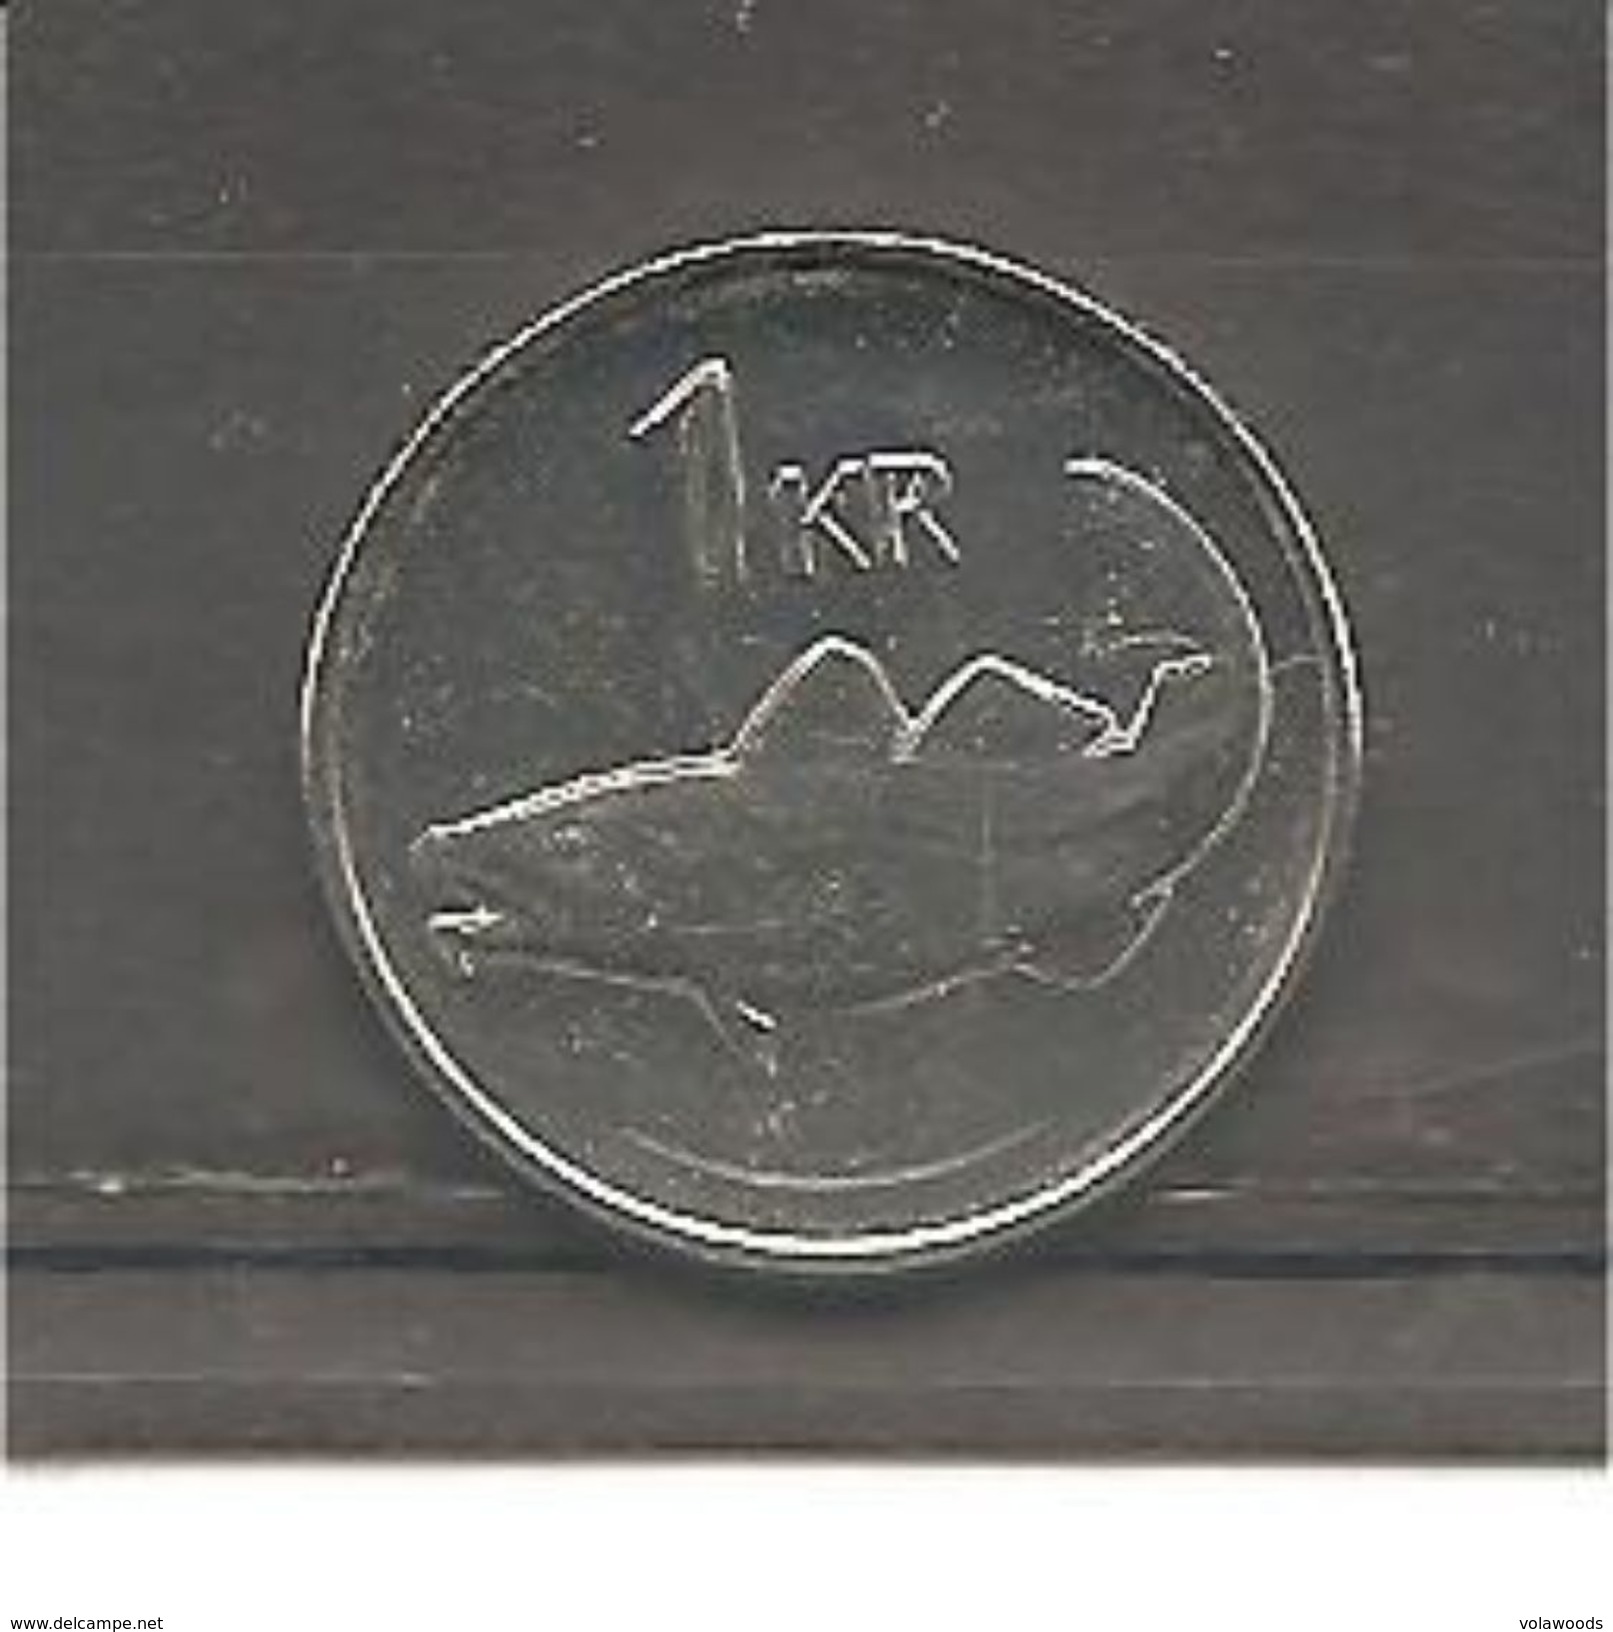 Islanda - Moneta Circolata Da 1 Corona - 2011 - Island